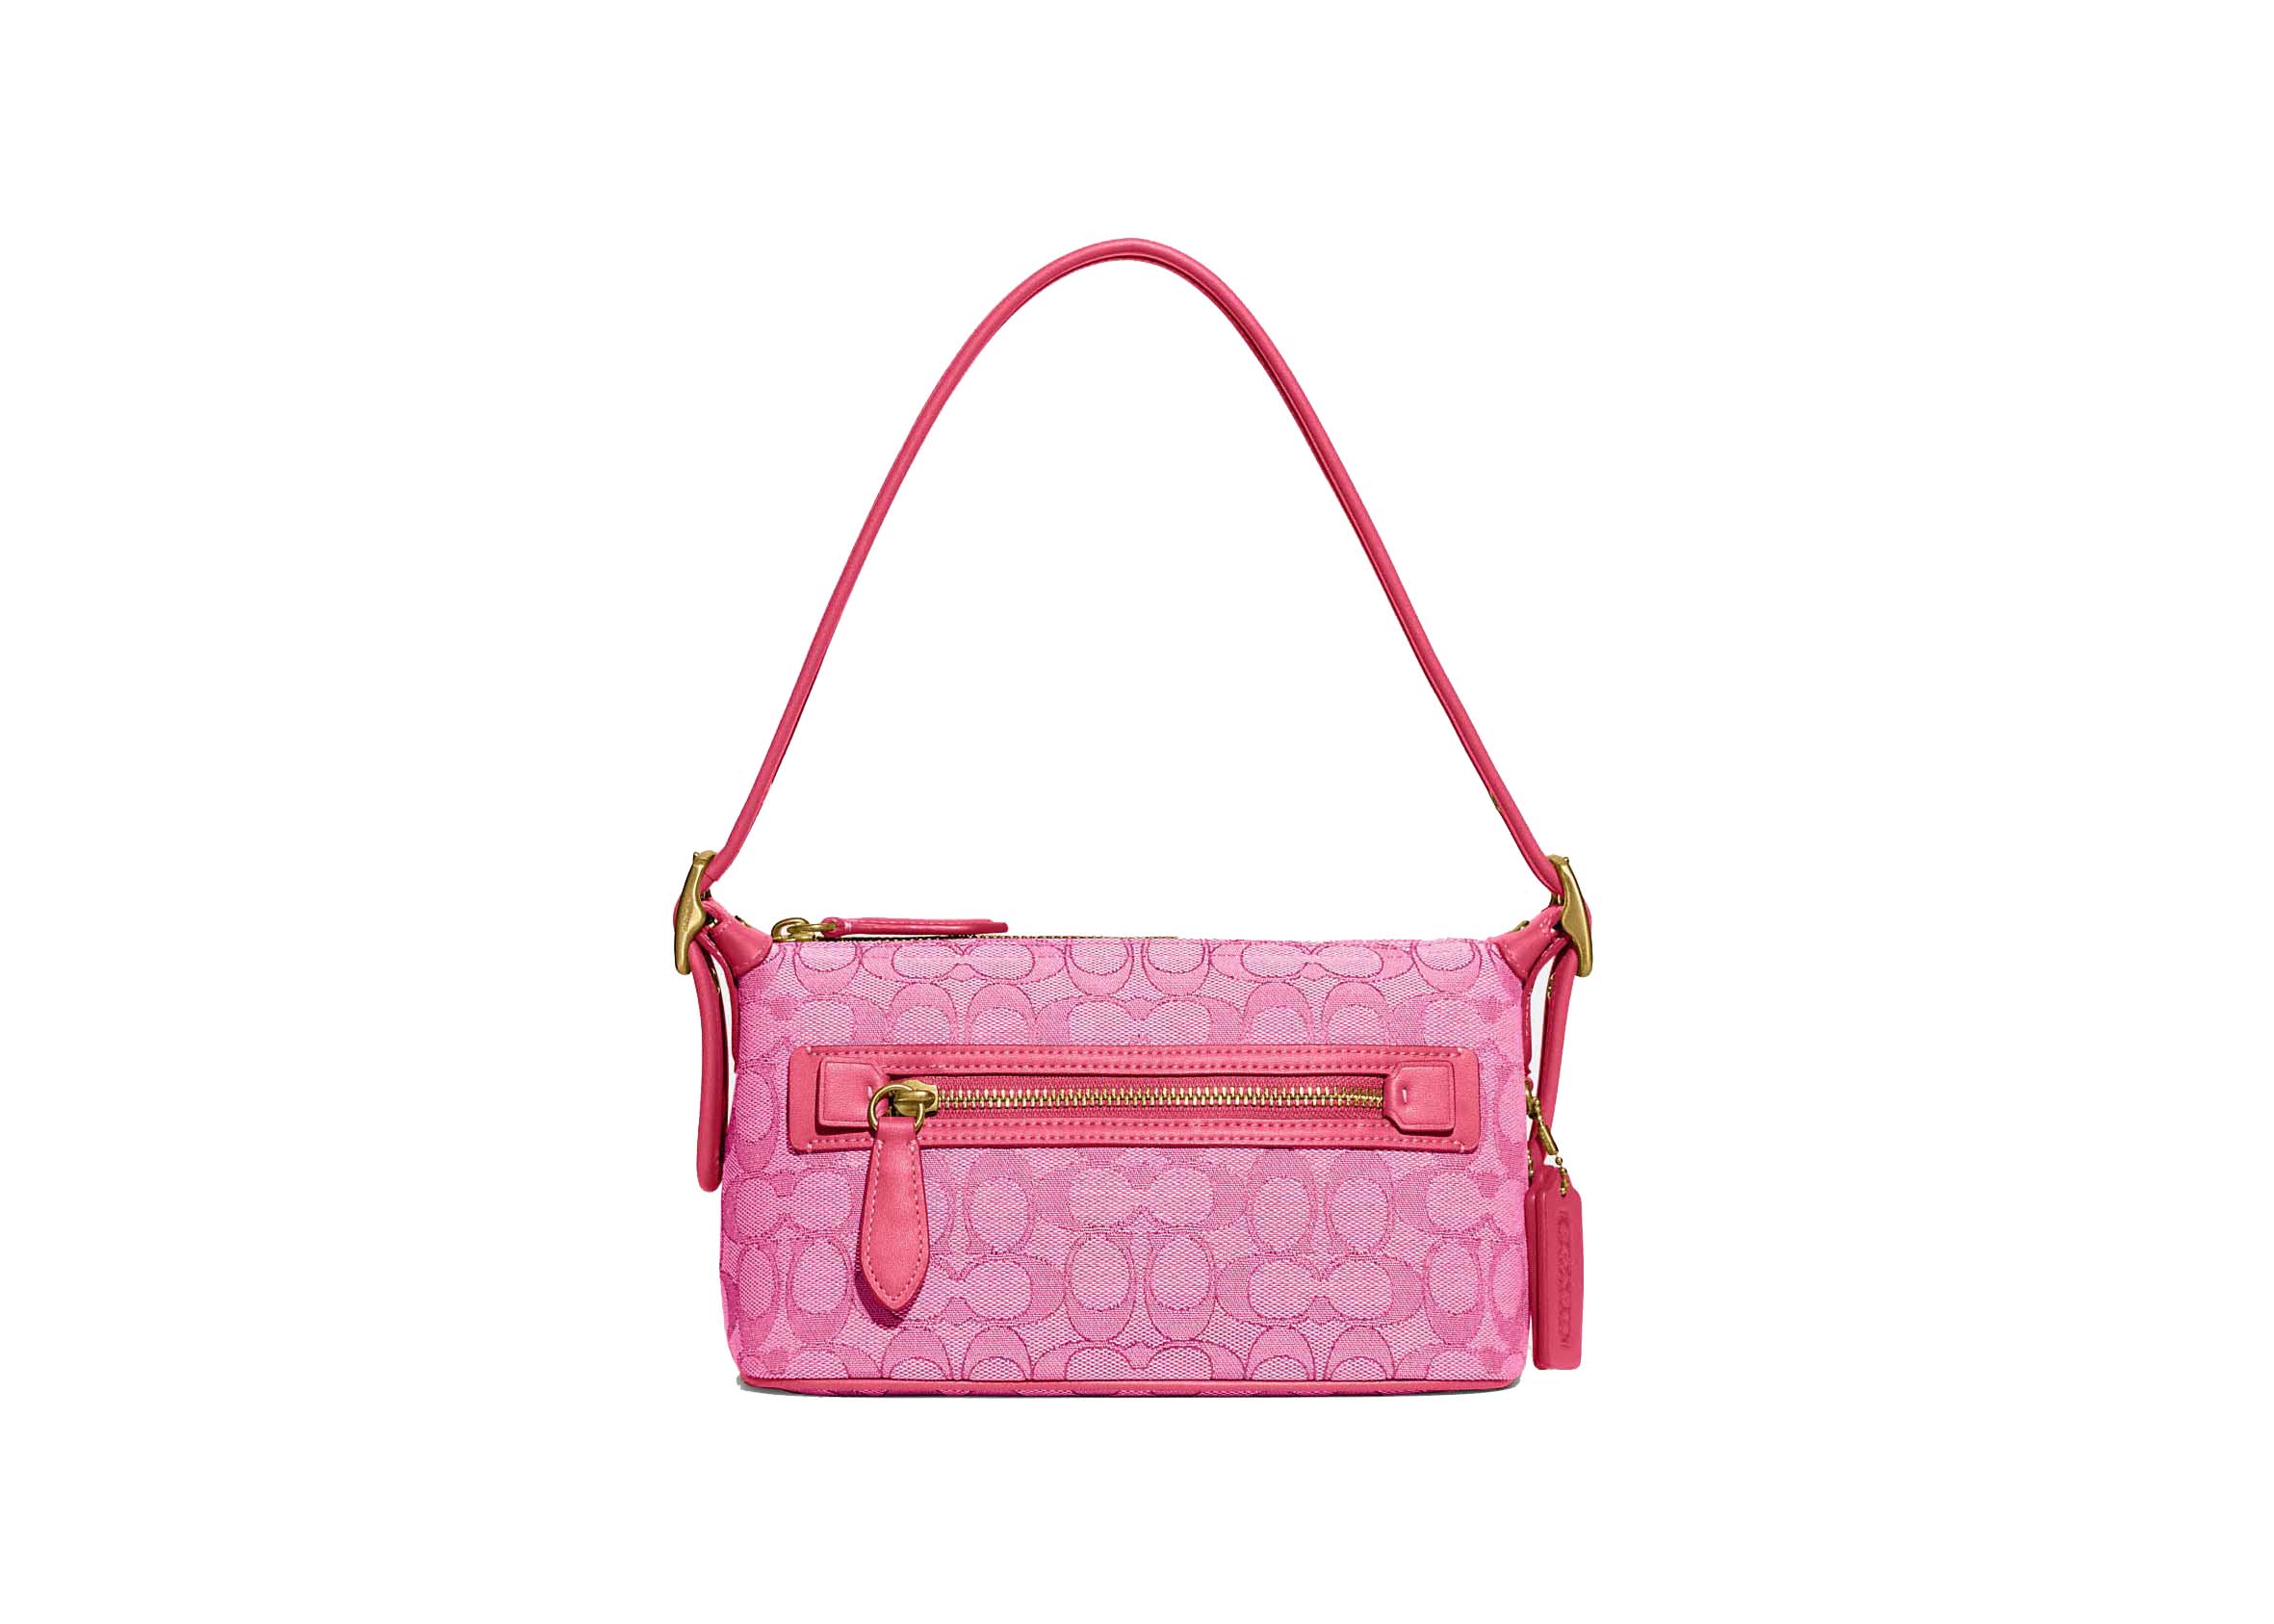 Coach Hot Pink Signature Peyton Tote Bag Purse Handbag Shoulder Bag  K1261-F22322 | eBay